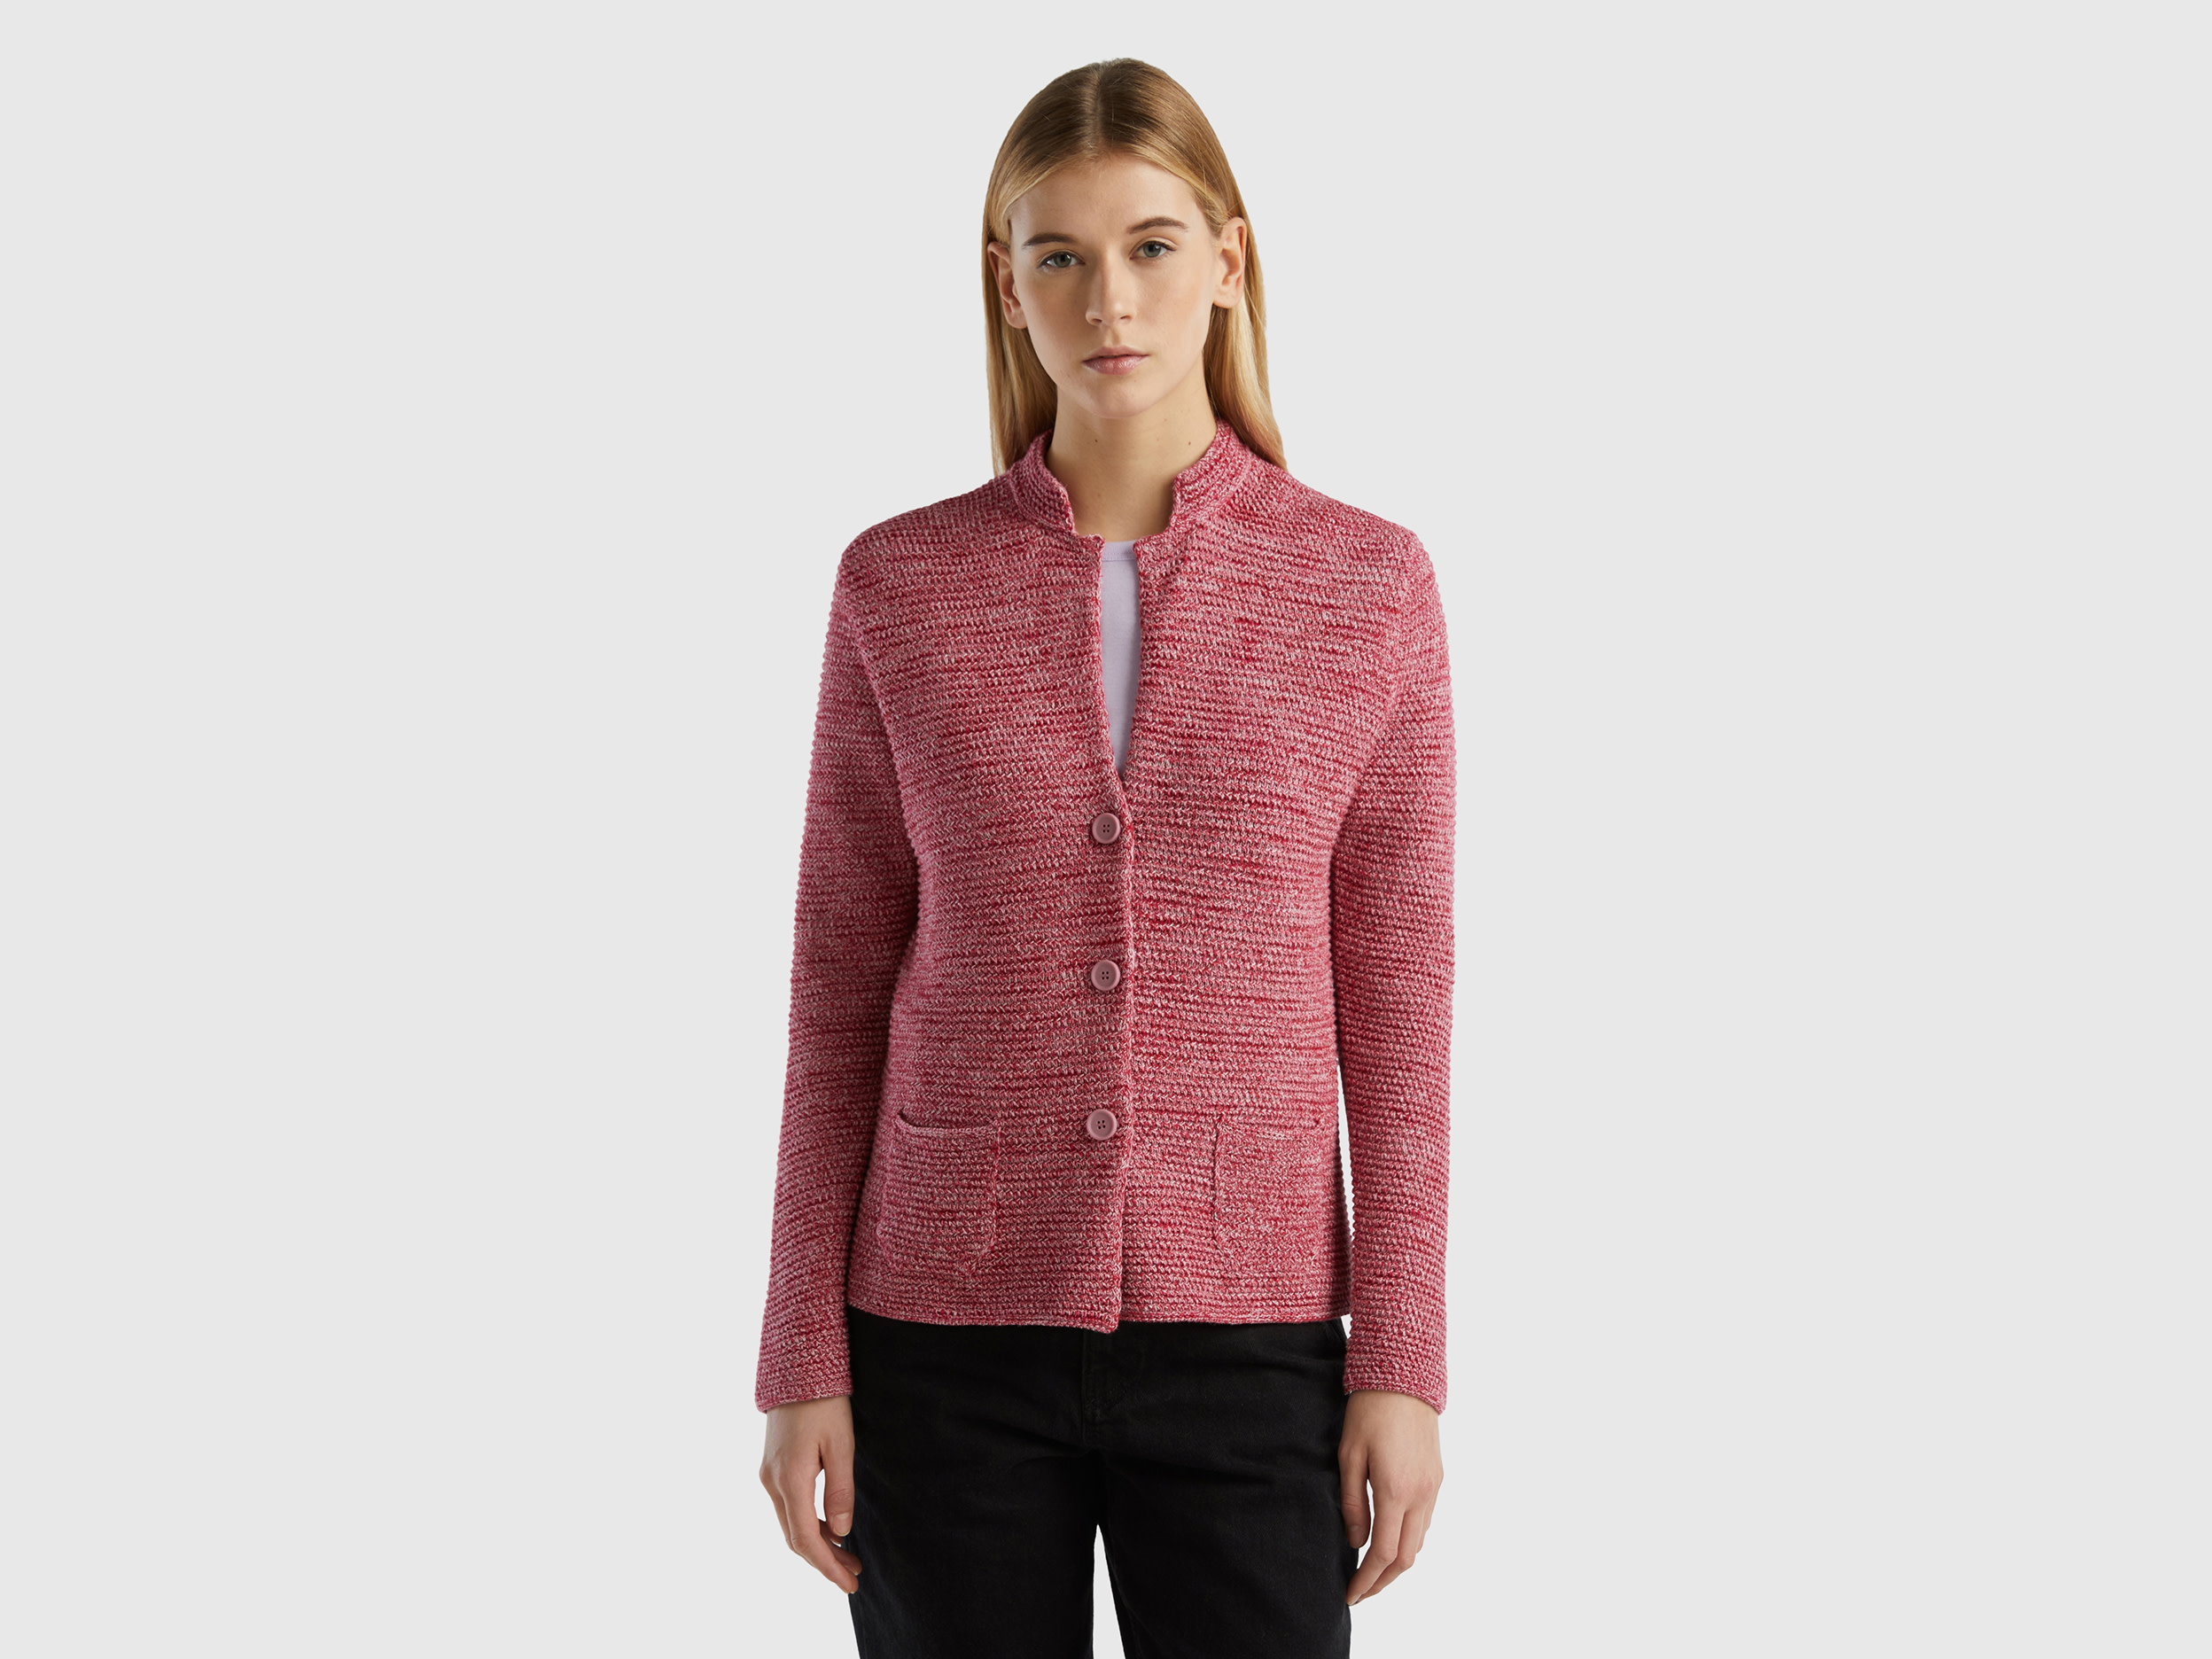 Benetton, 100% Cotton Knit Jacket, size S, Fuchsia, Women